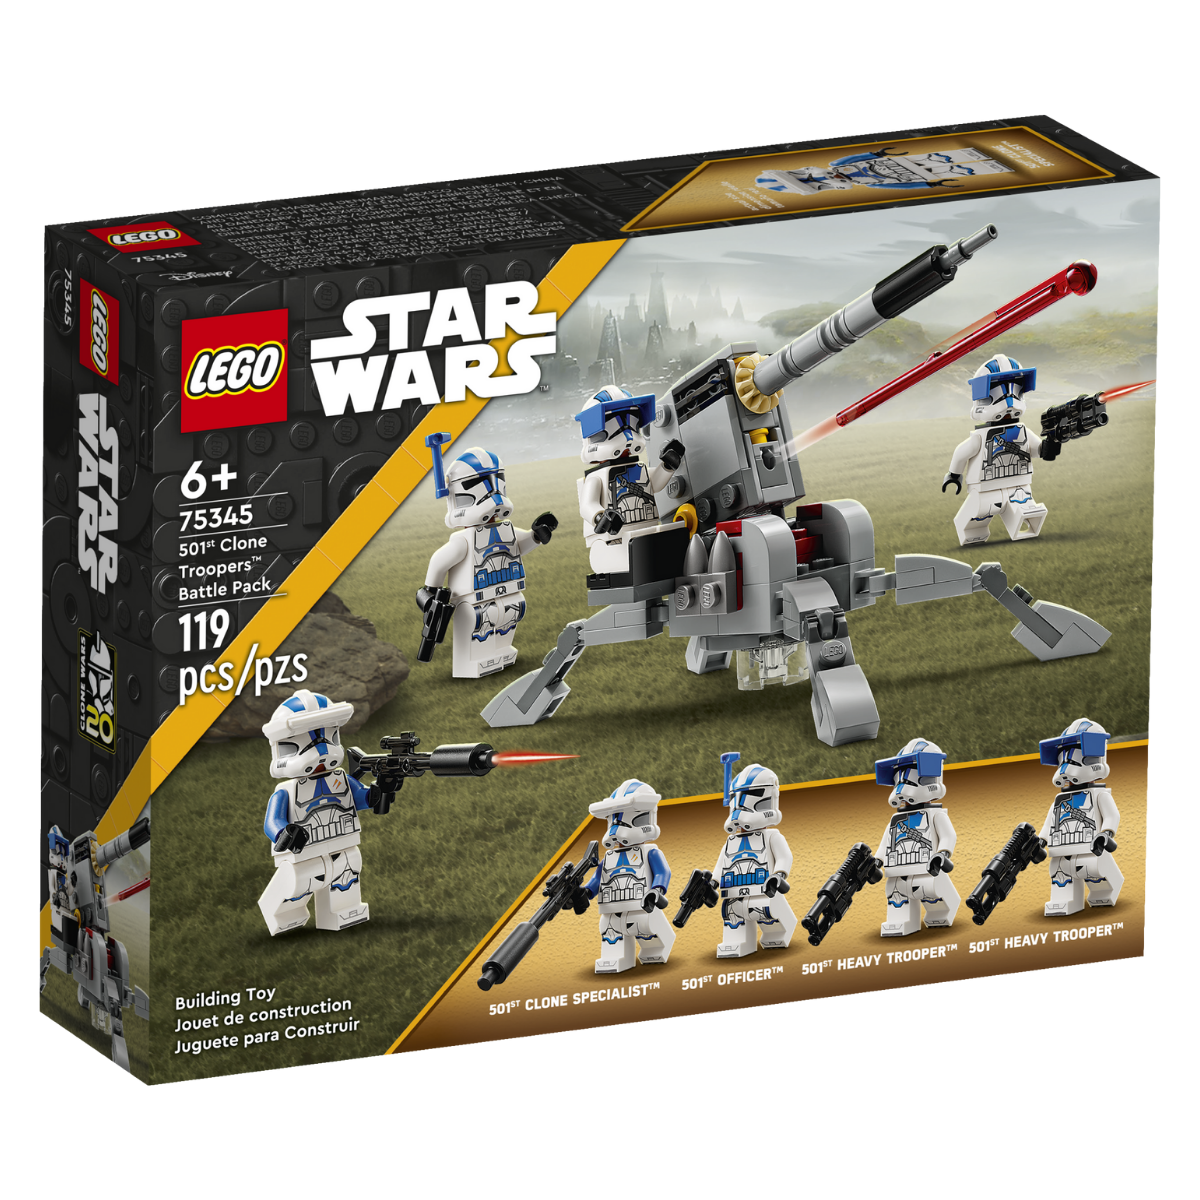 Star Wars 501 Clone Troopers Battle Pack